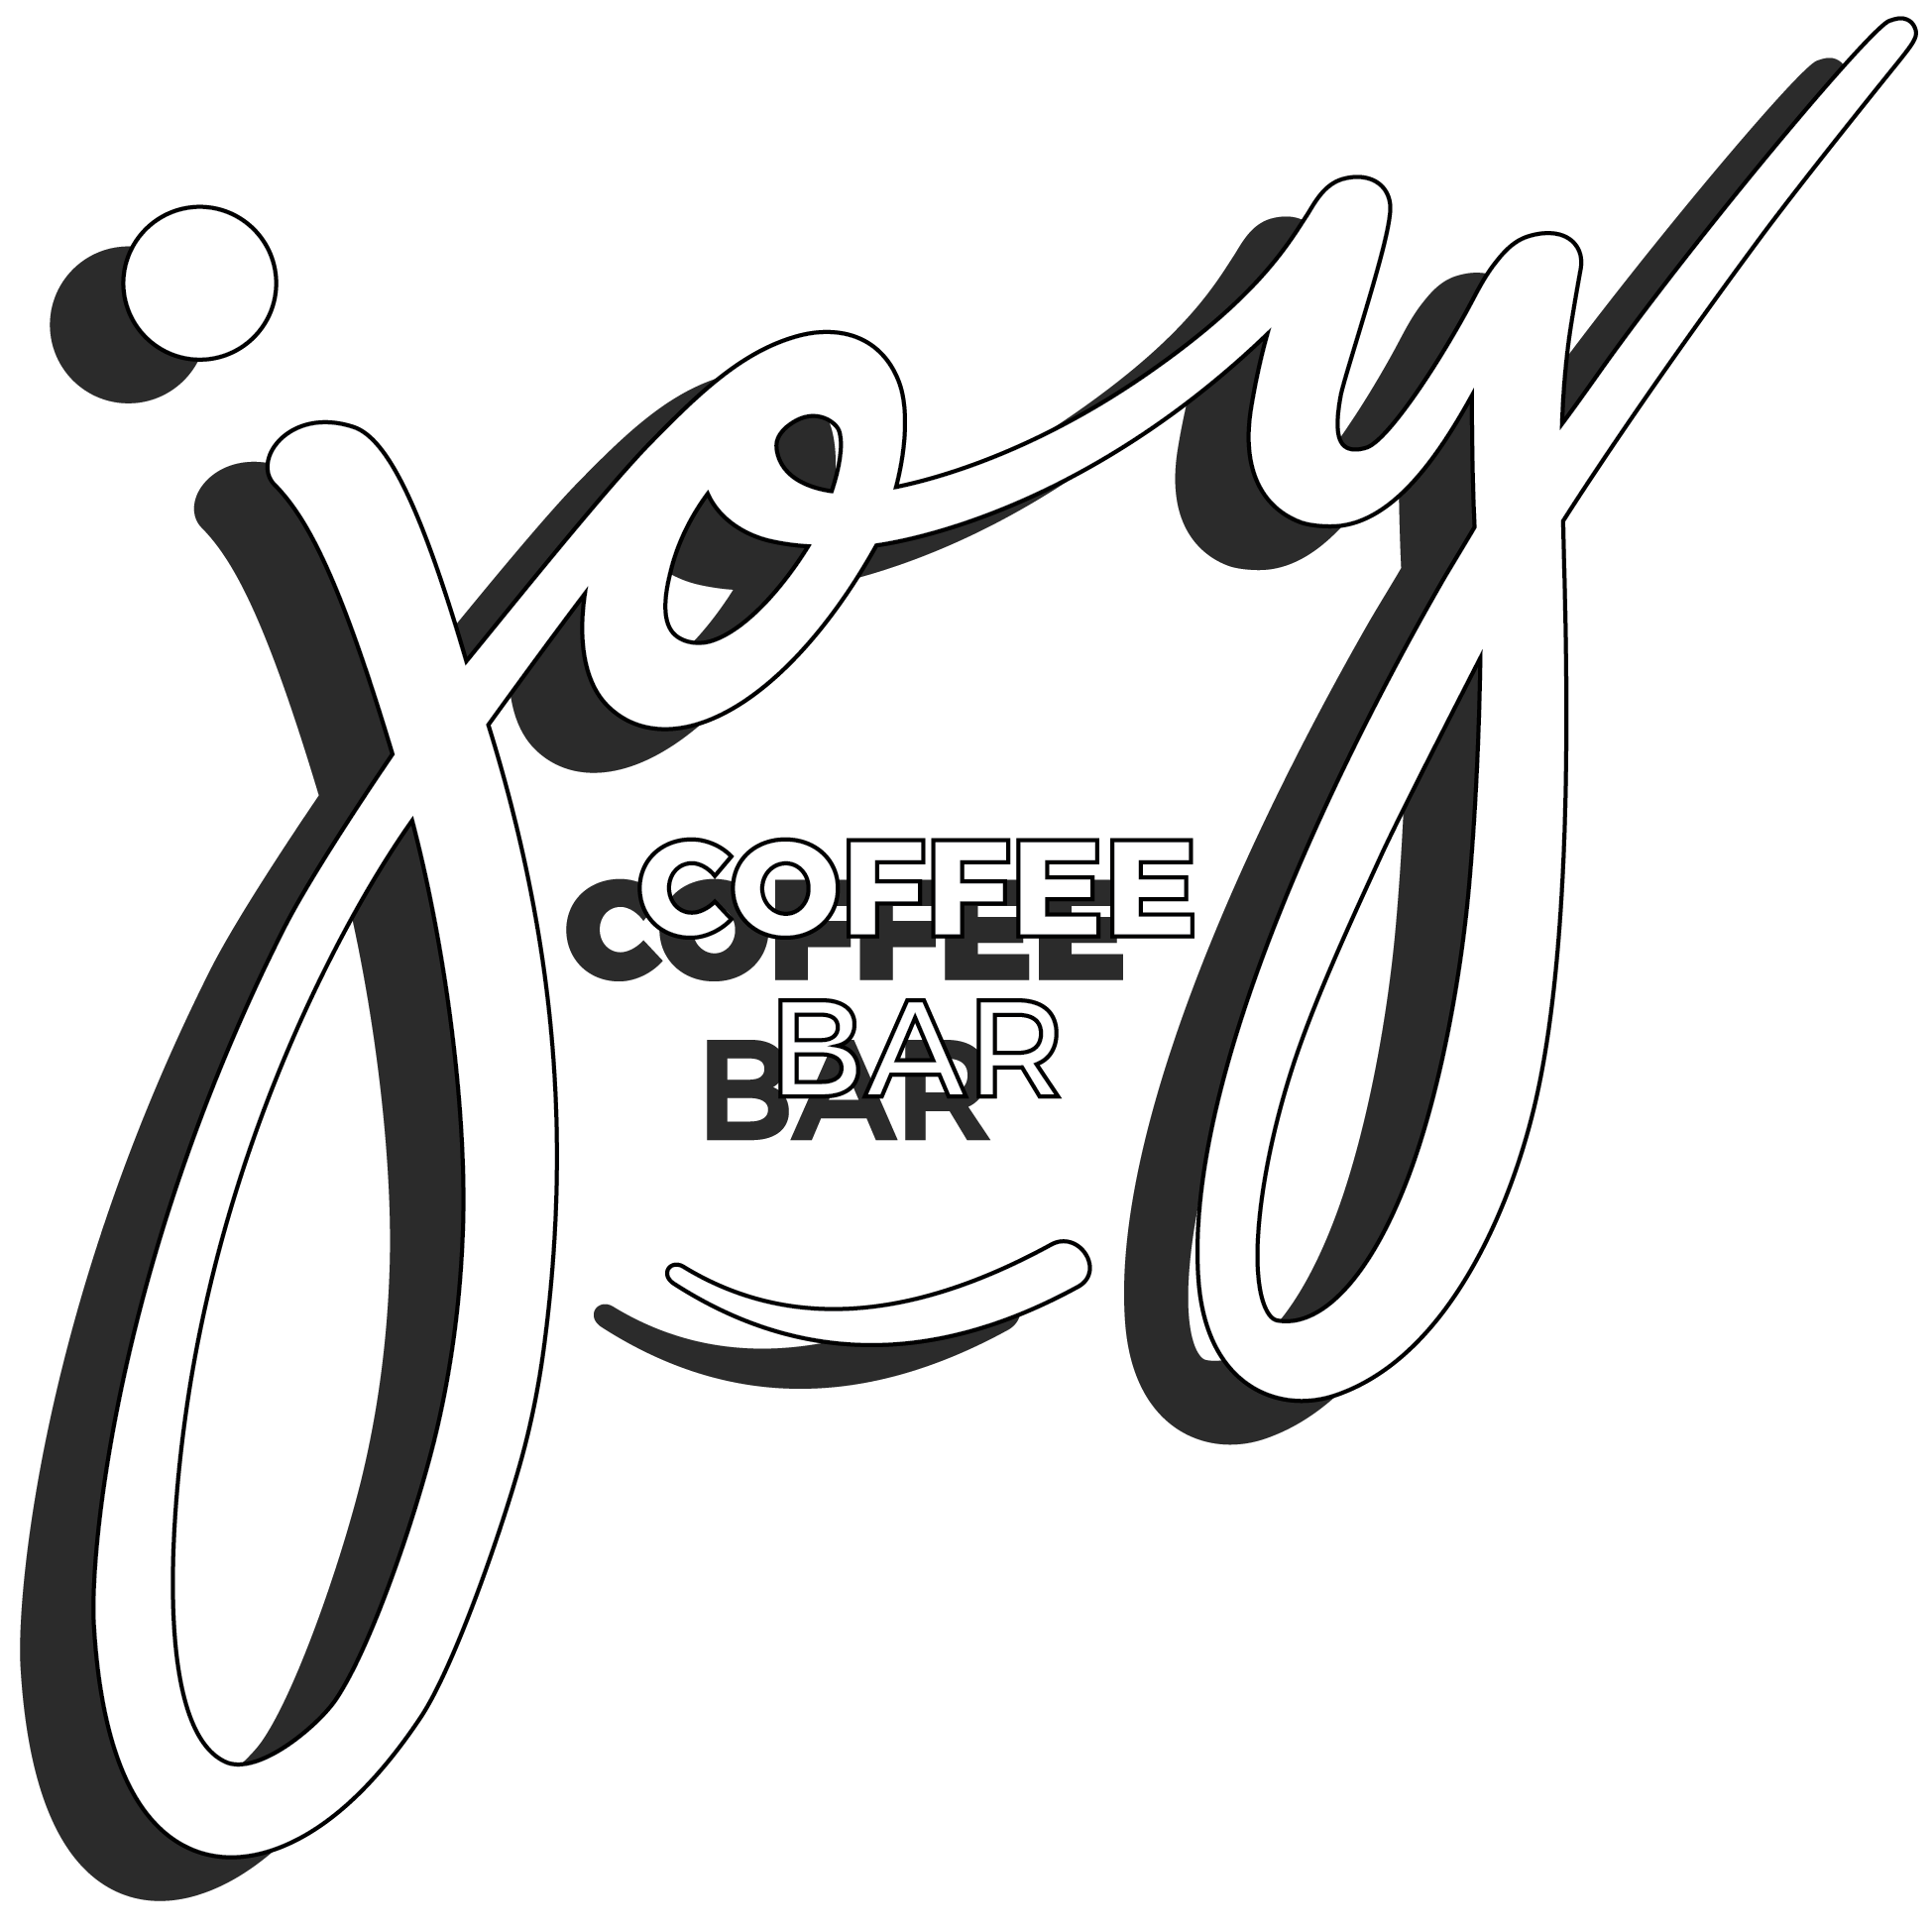 Joy coffee logo hollow